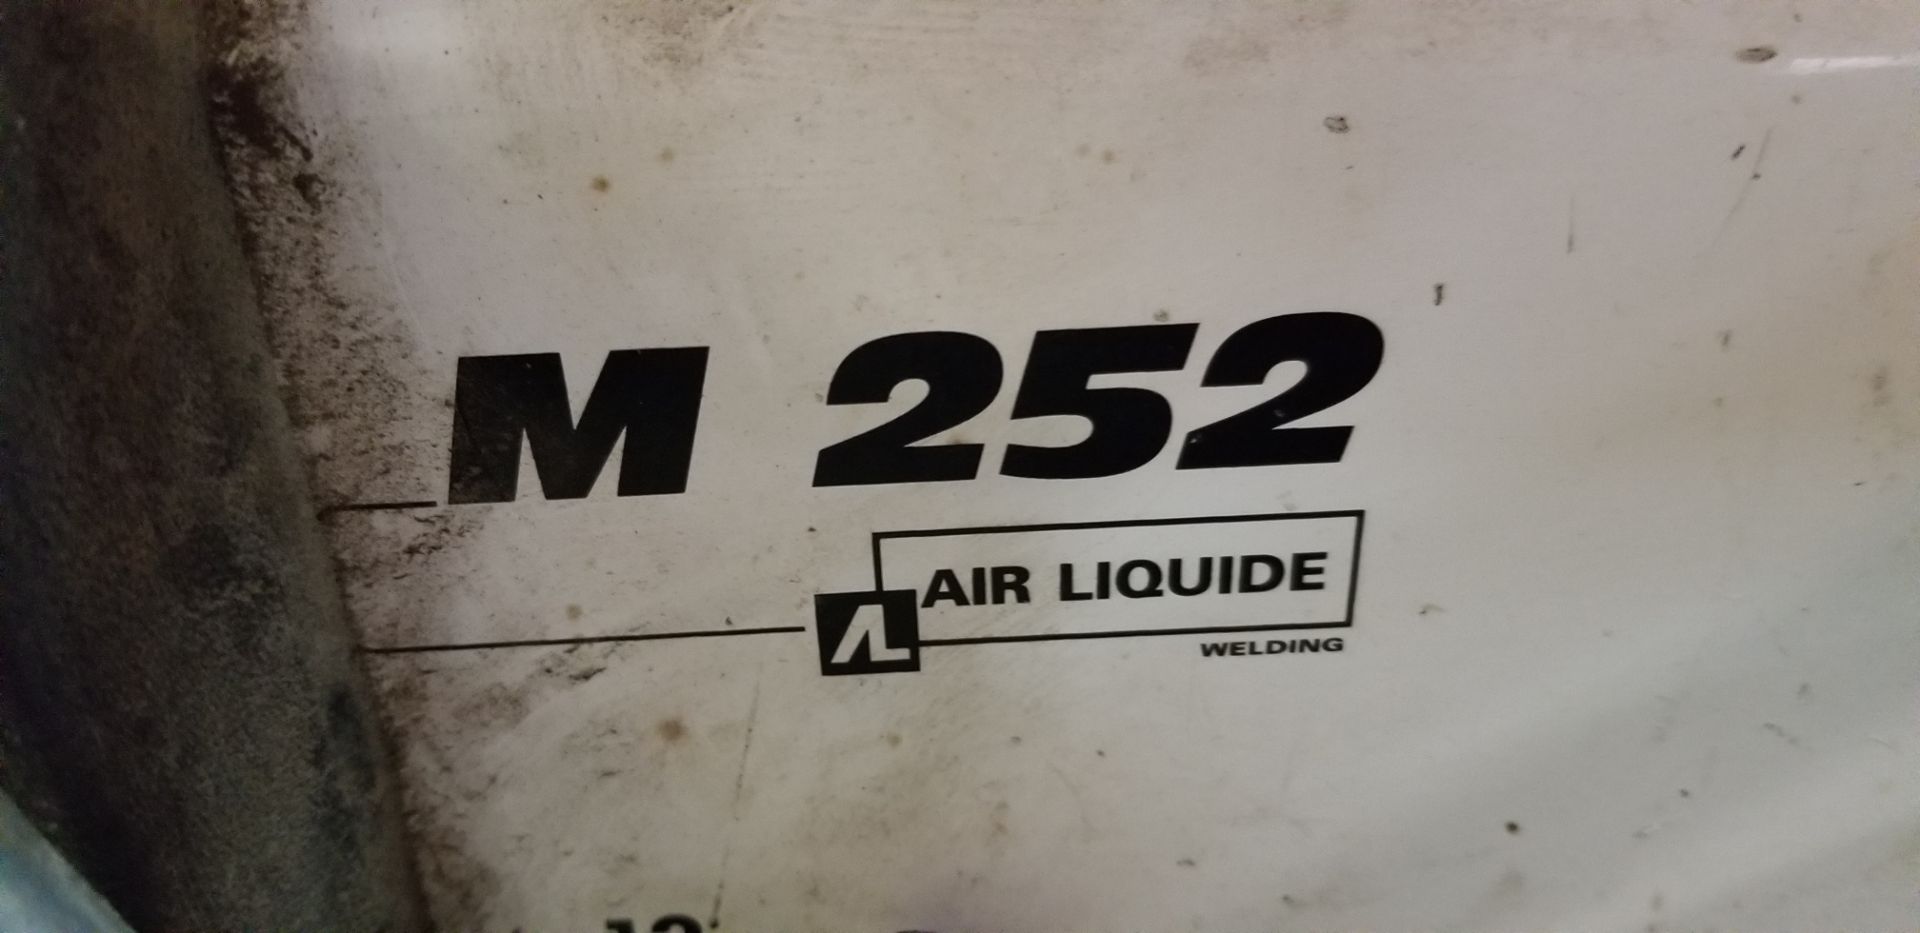 AIR LIQUIDE Welding Machine Mod. M252 - Image 2 of 3